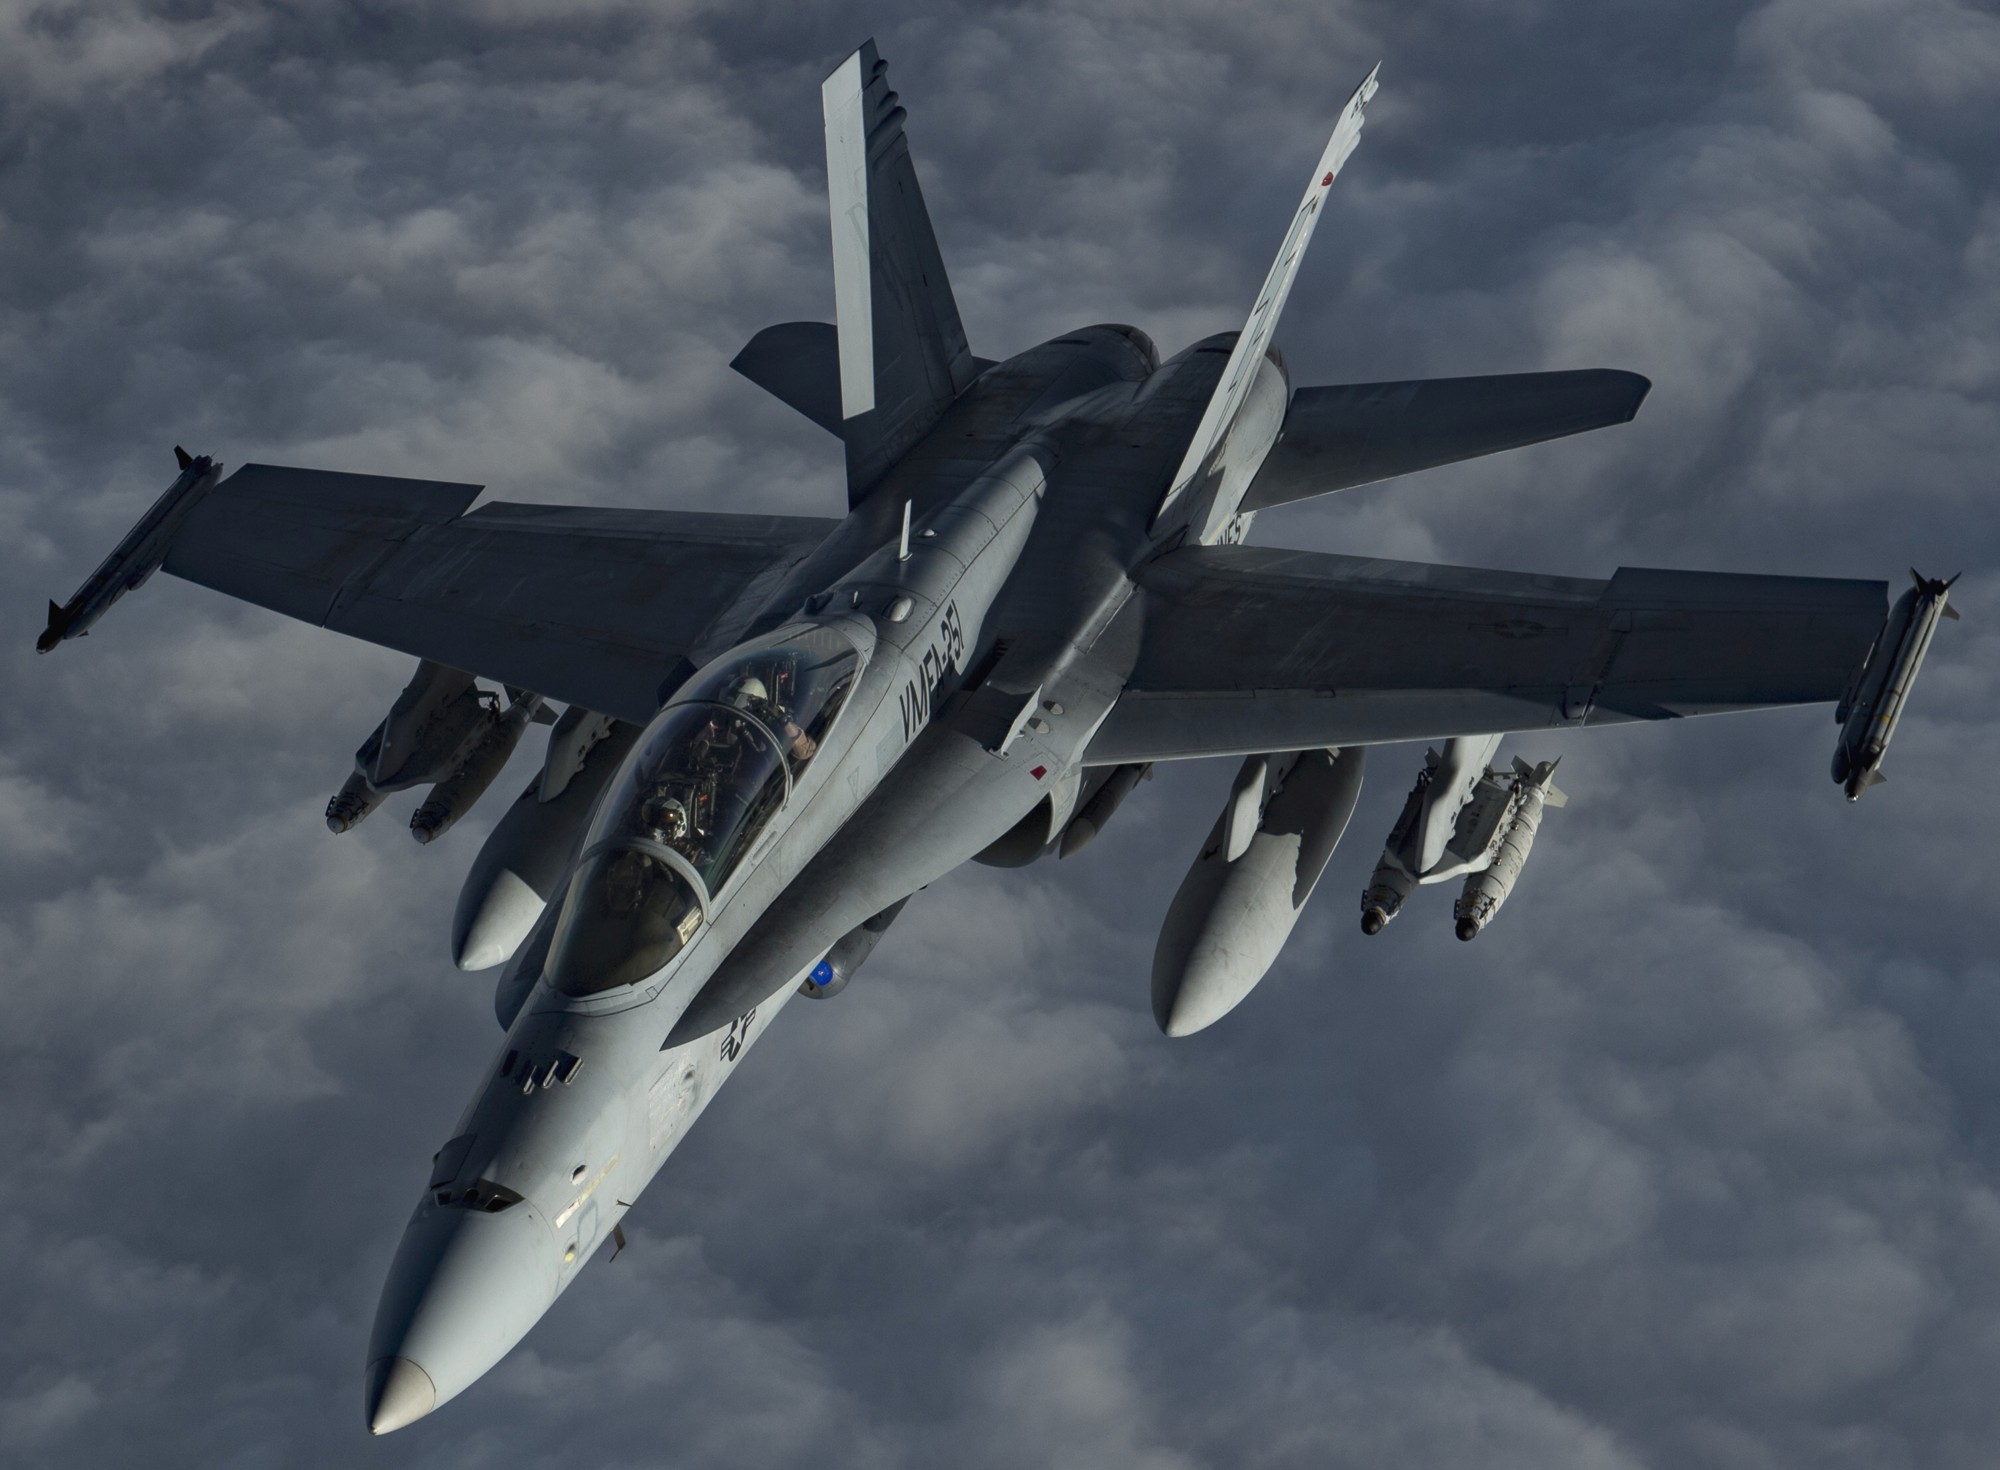 vmfa-251 thunderbolts marine fighter attack squadron usmc f/a-18d hornet centcom aor 170 refueling